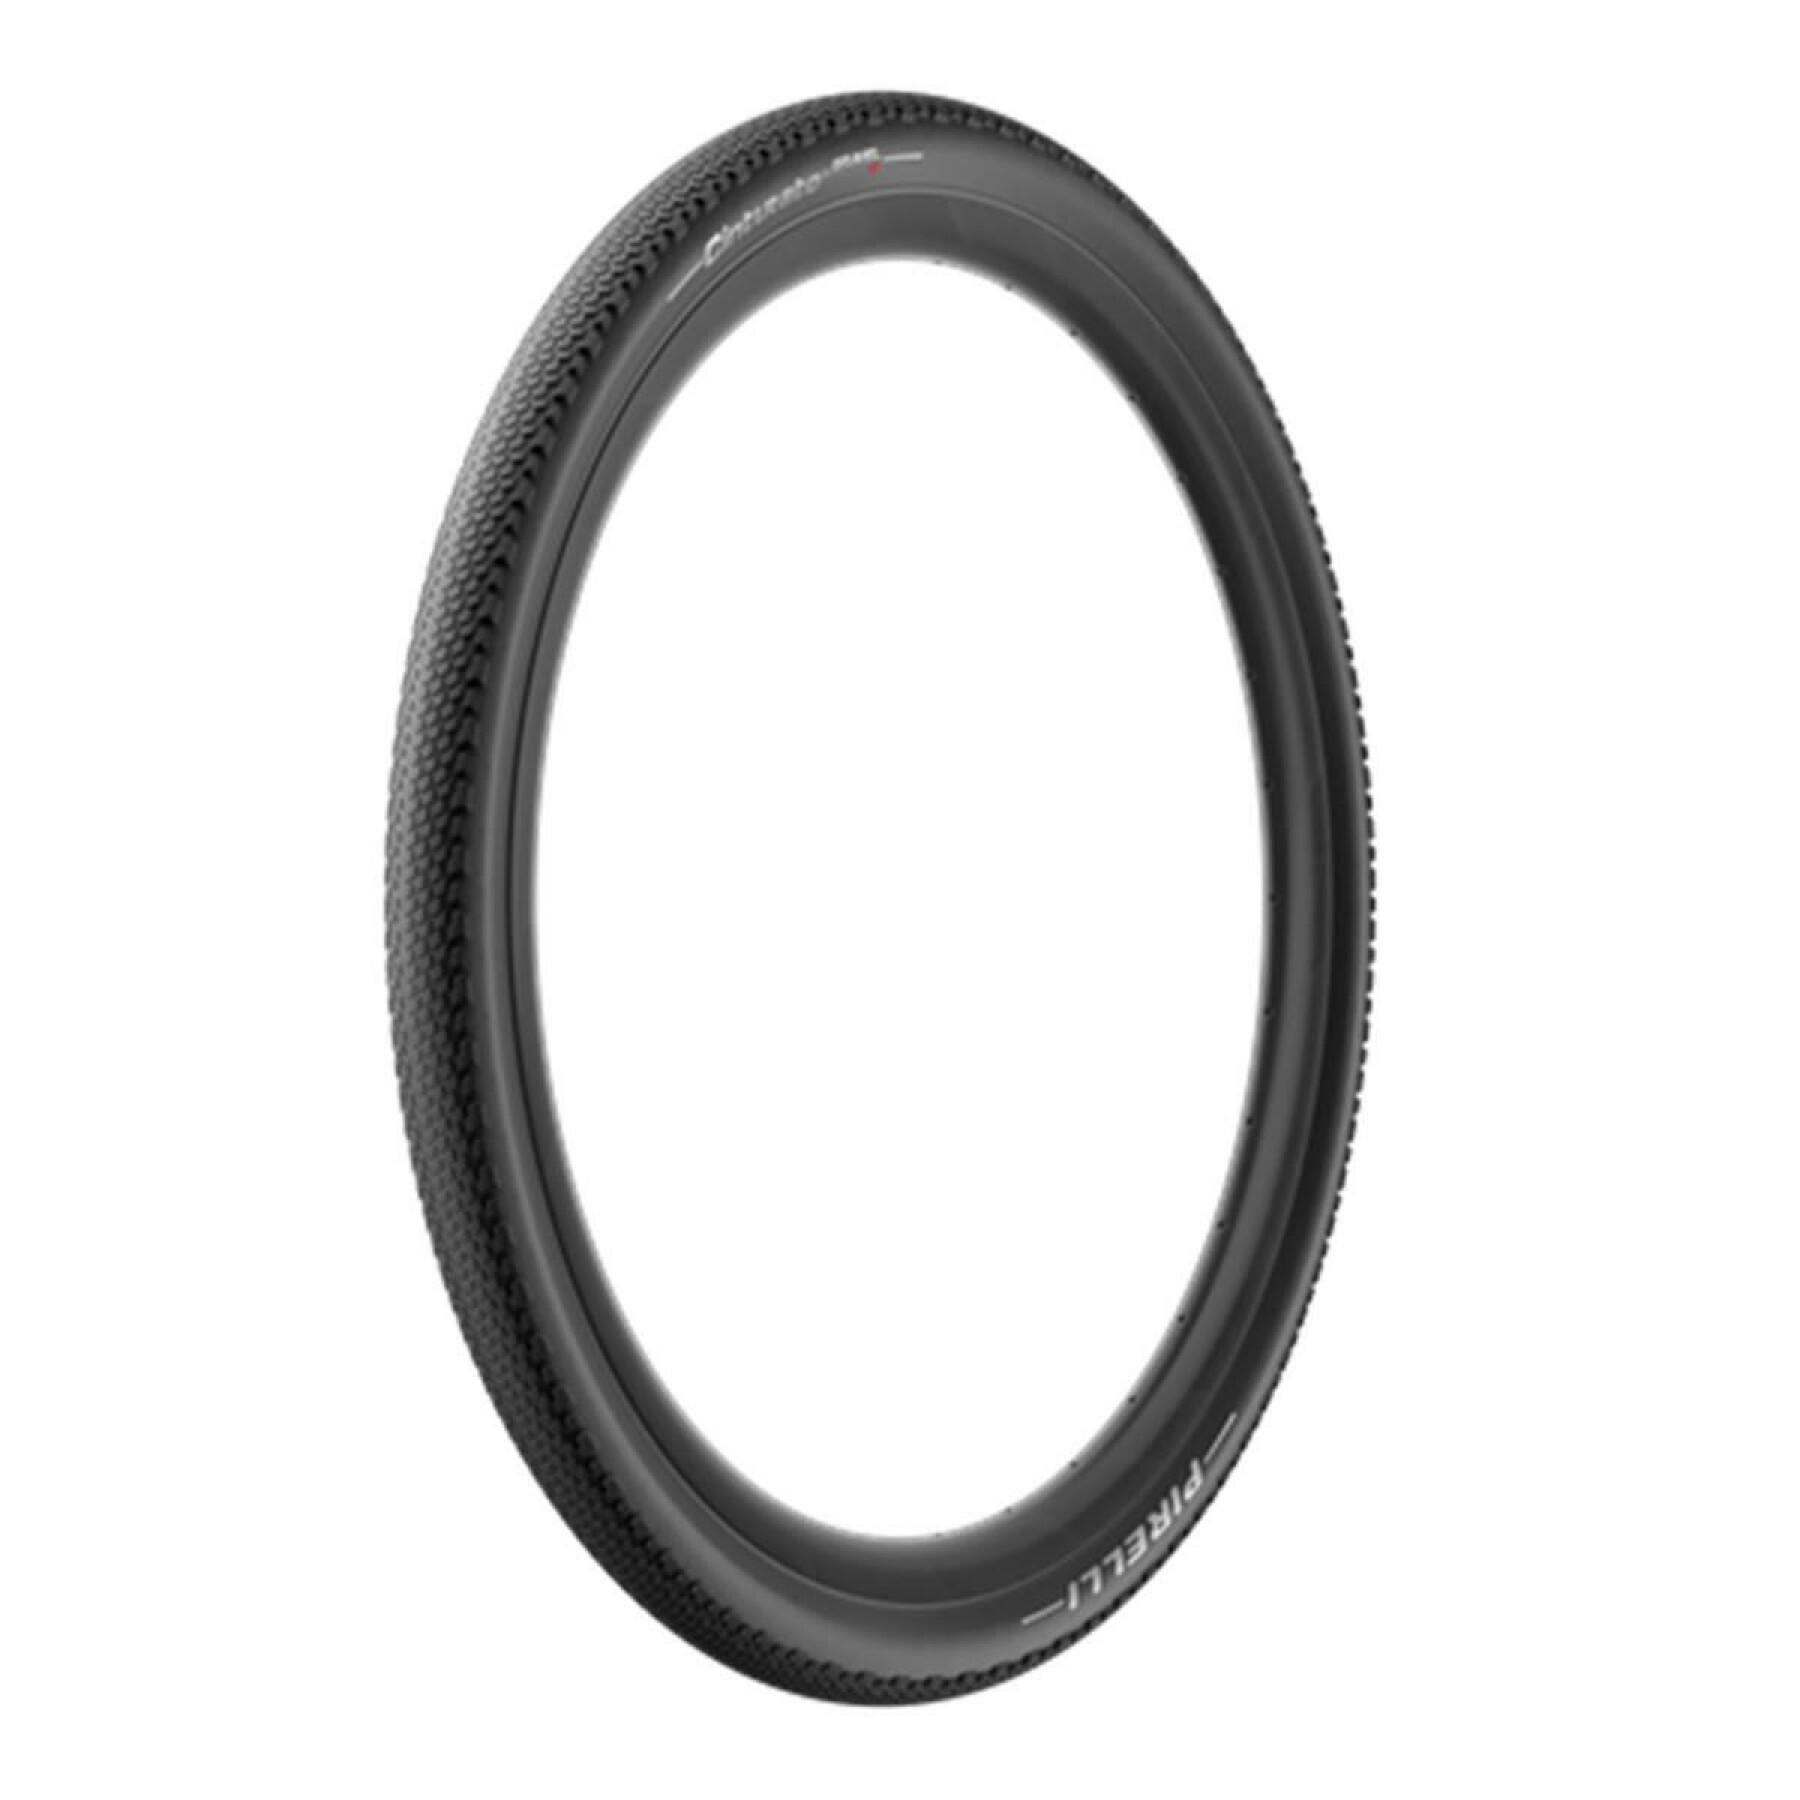 Neumático de grava Pirelli Cinturato Hard Tlr